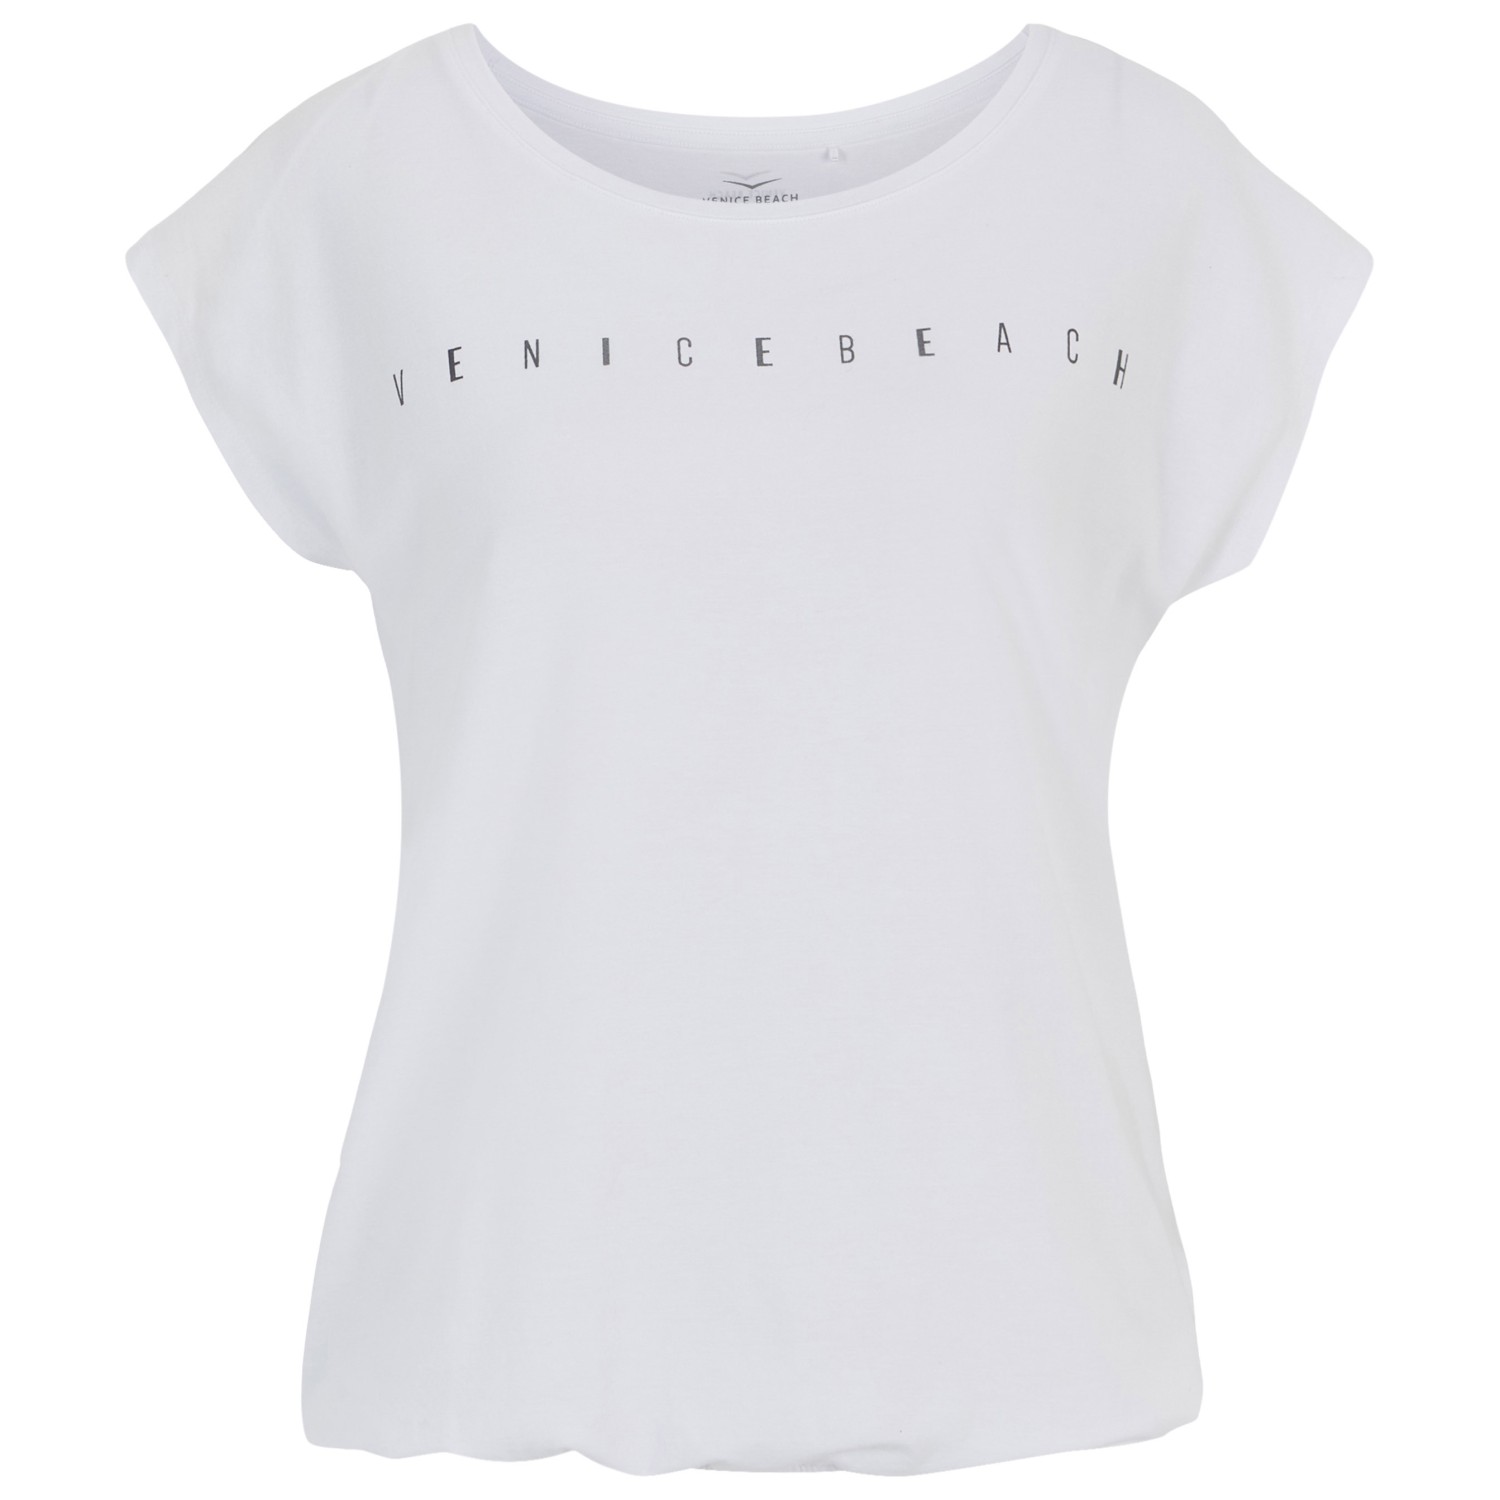 Функциональная рубашка Venice Beach Women's Wonder T Shirt, белый